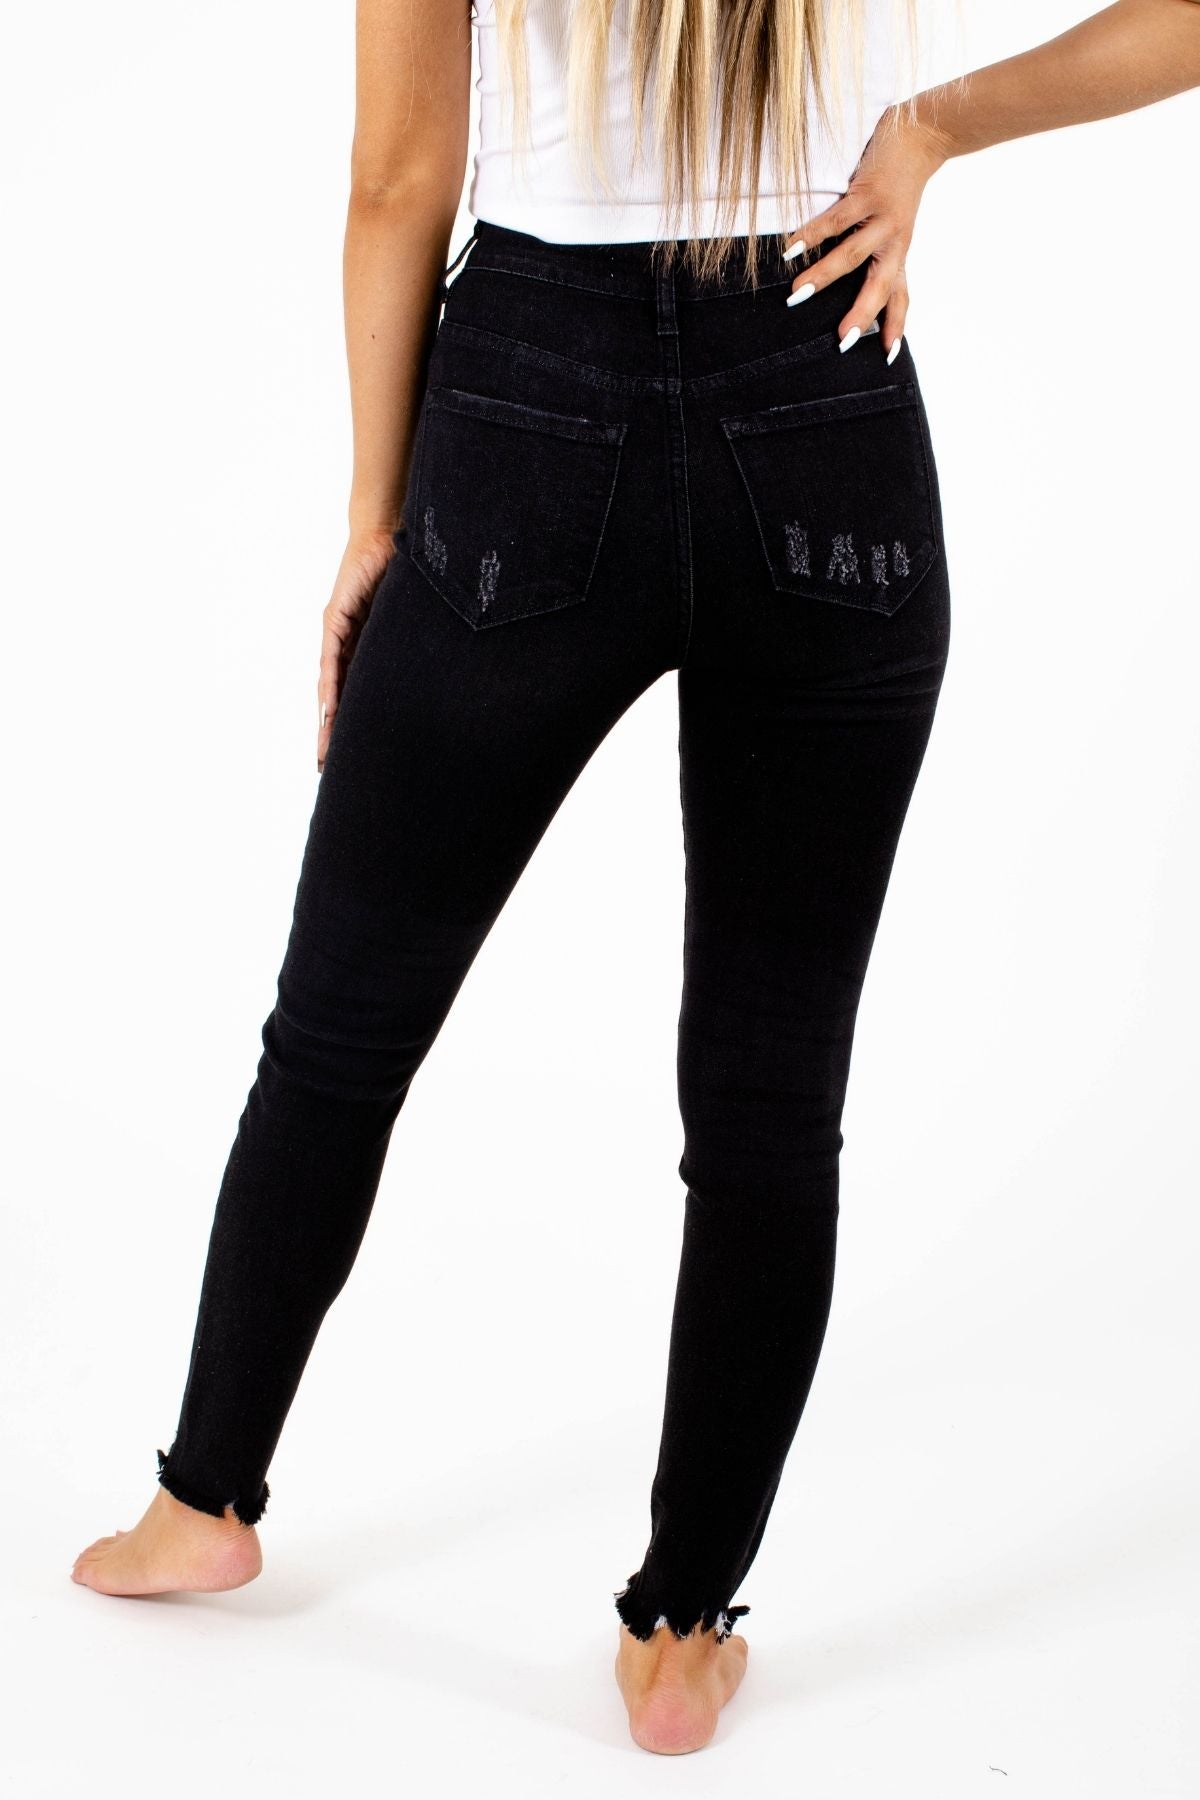 Black KanCan Jeans